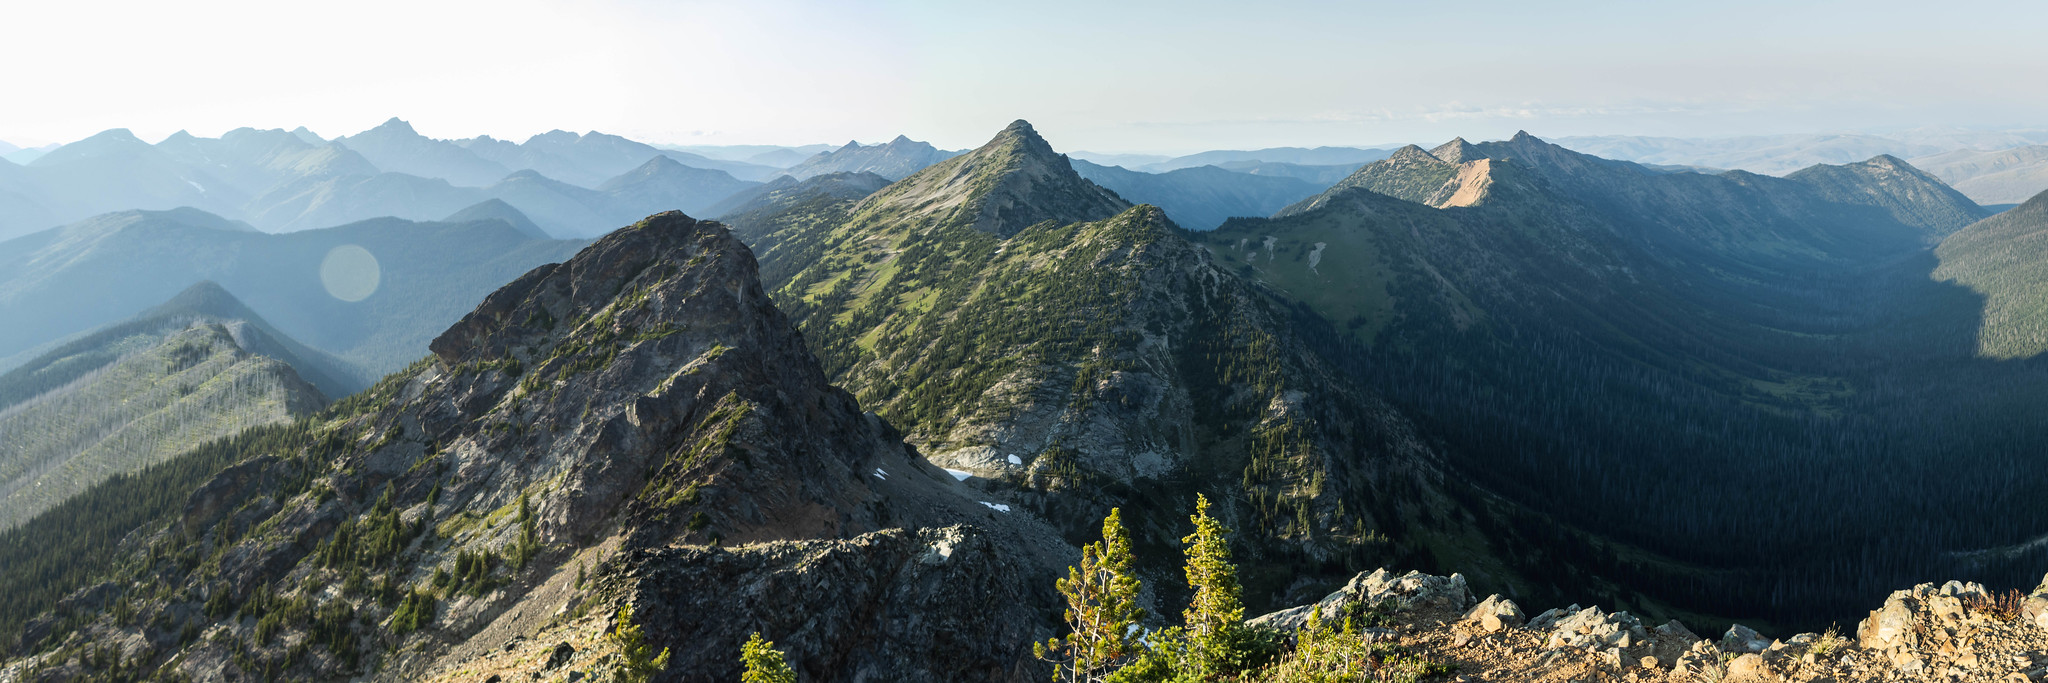 Northern panoramic view to Three Fools Peak and Soda Peak